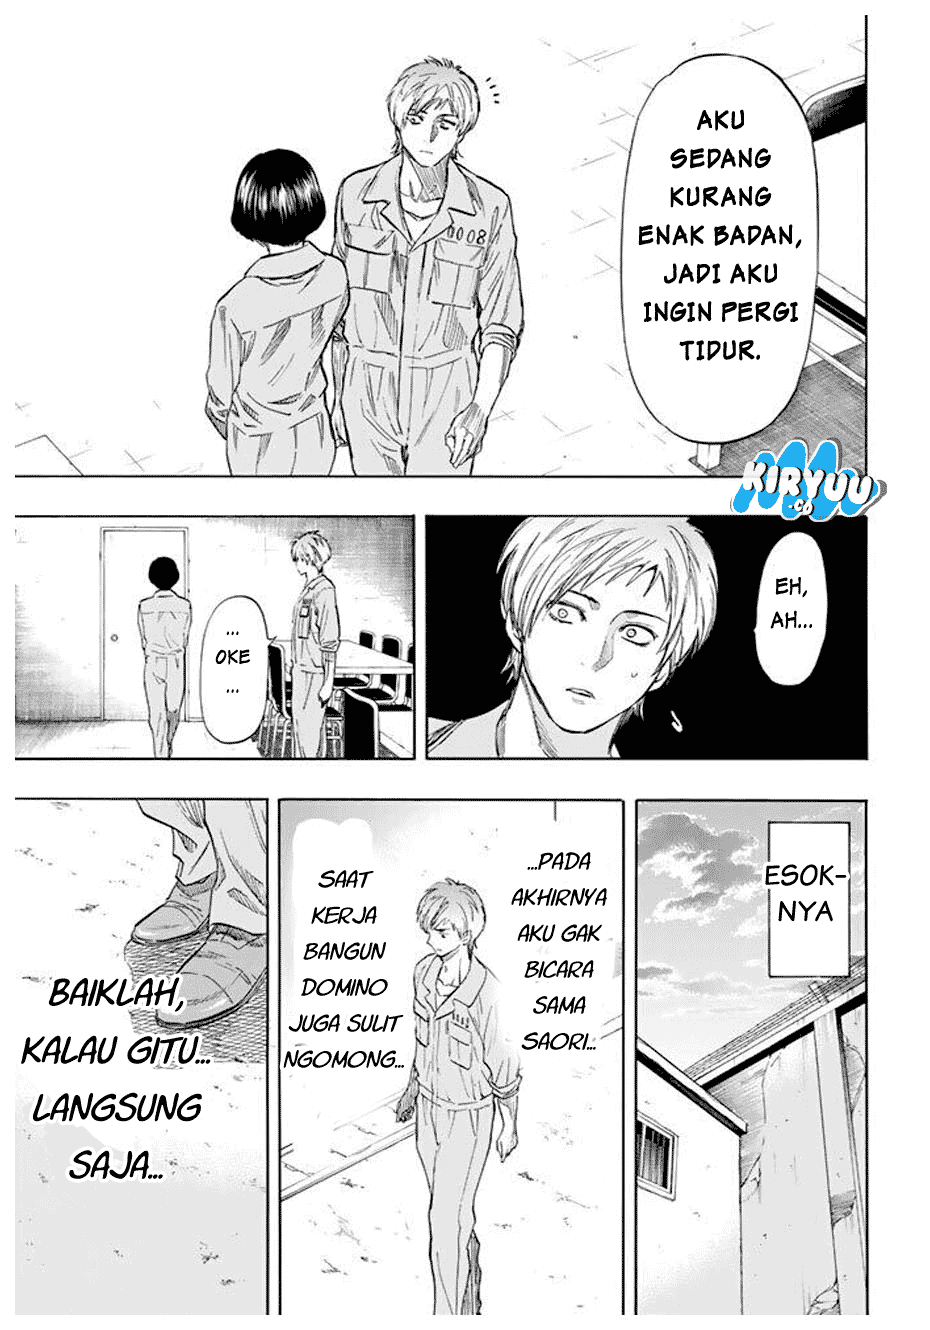 Tomodachi Game Chapter 43 Bahasa Indonesia